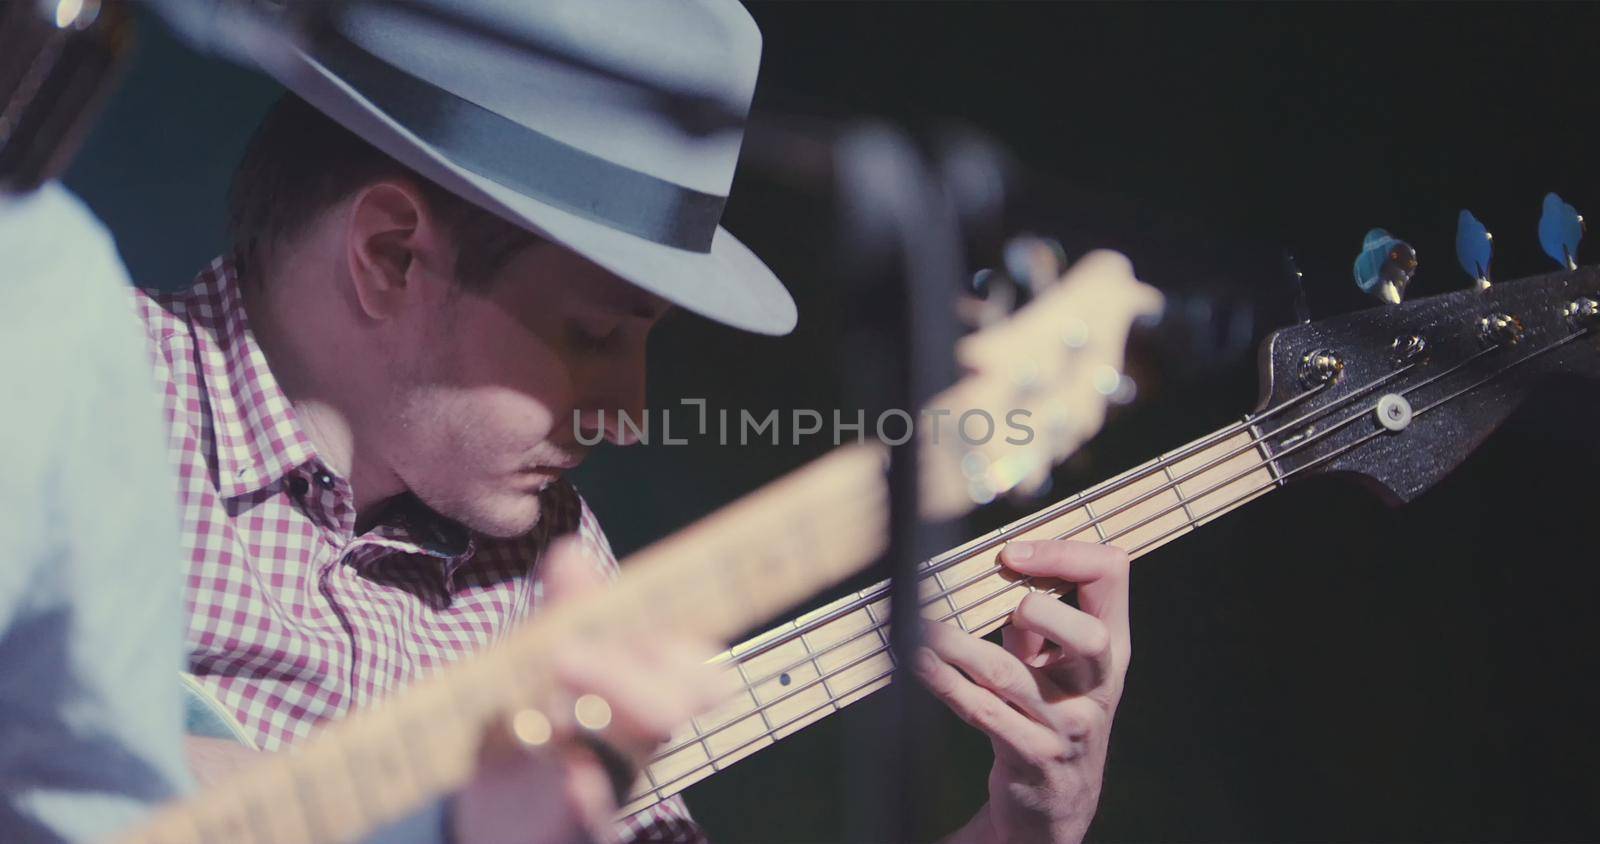 Blues in night club - guitarist plays guitar, close up, telephoto